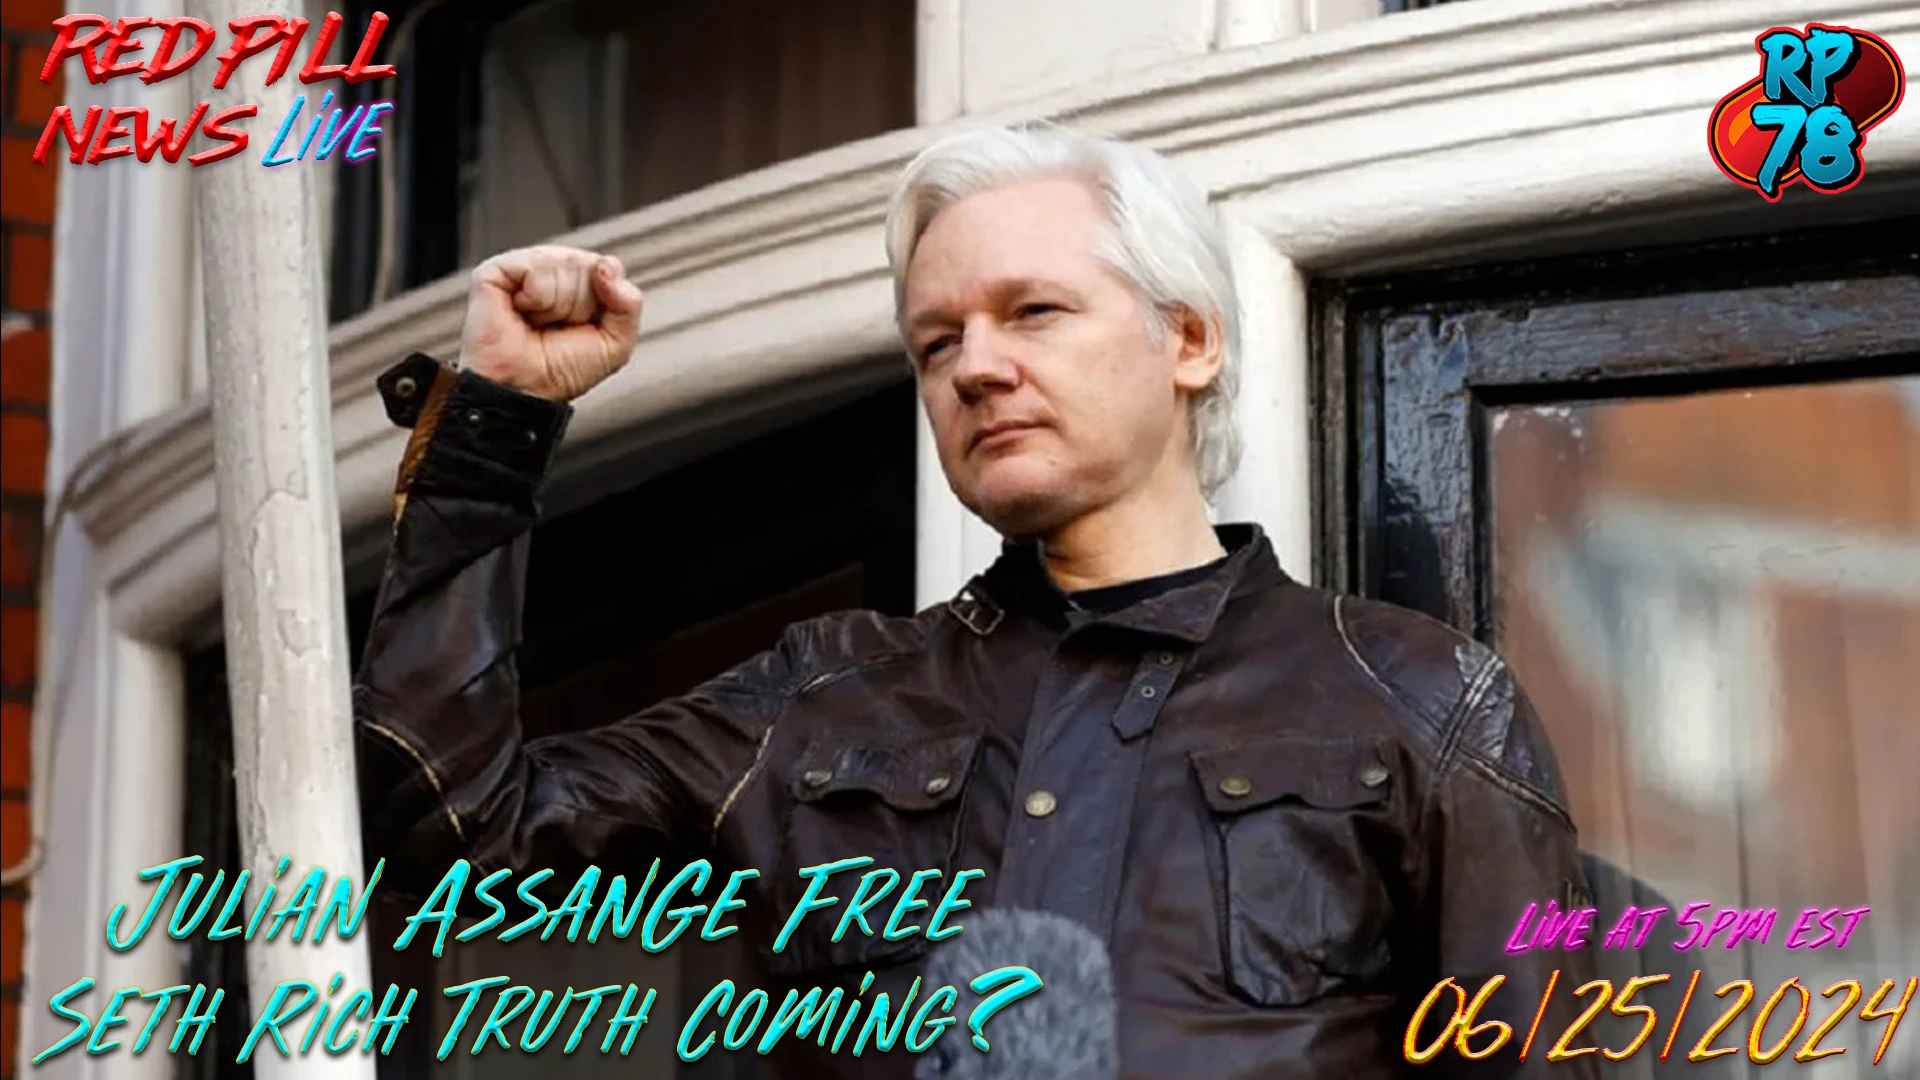 Julian Assange June ETA Has Arrived, is Seth Rich Next on Red Pill News Live